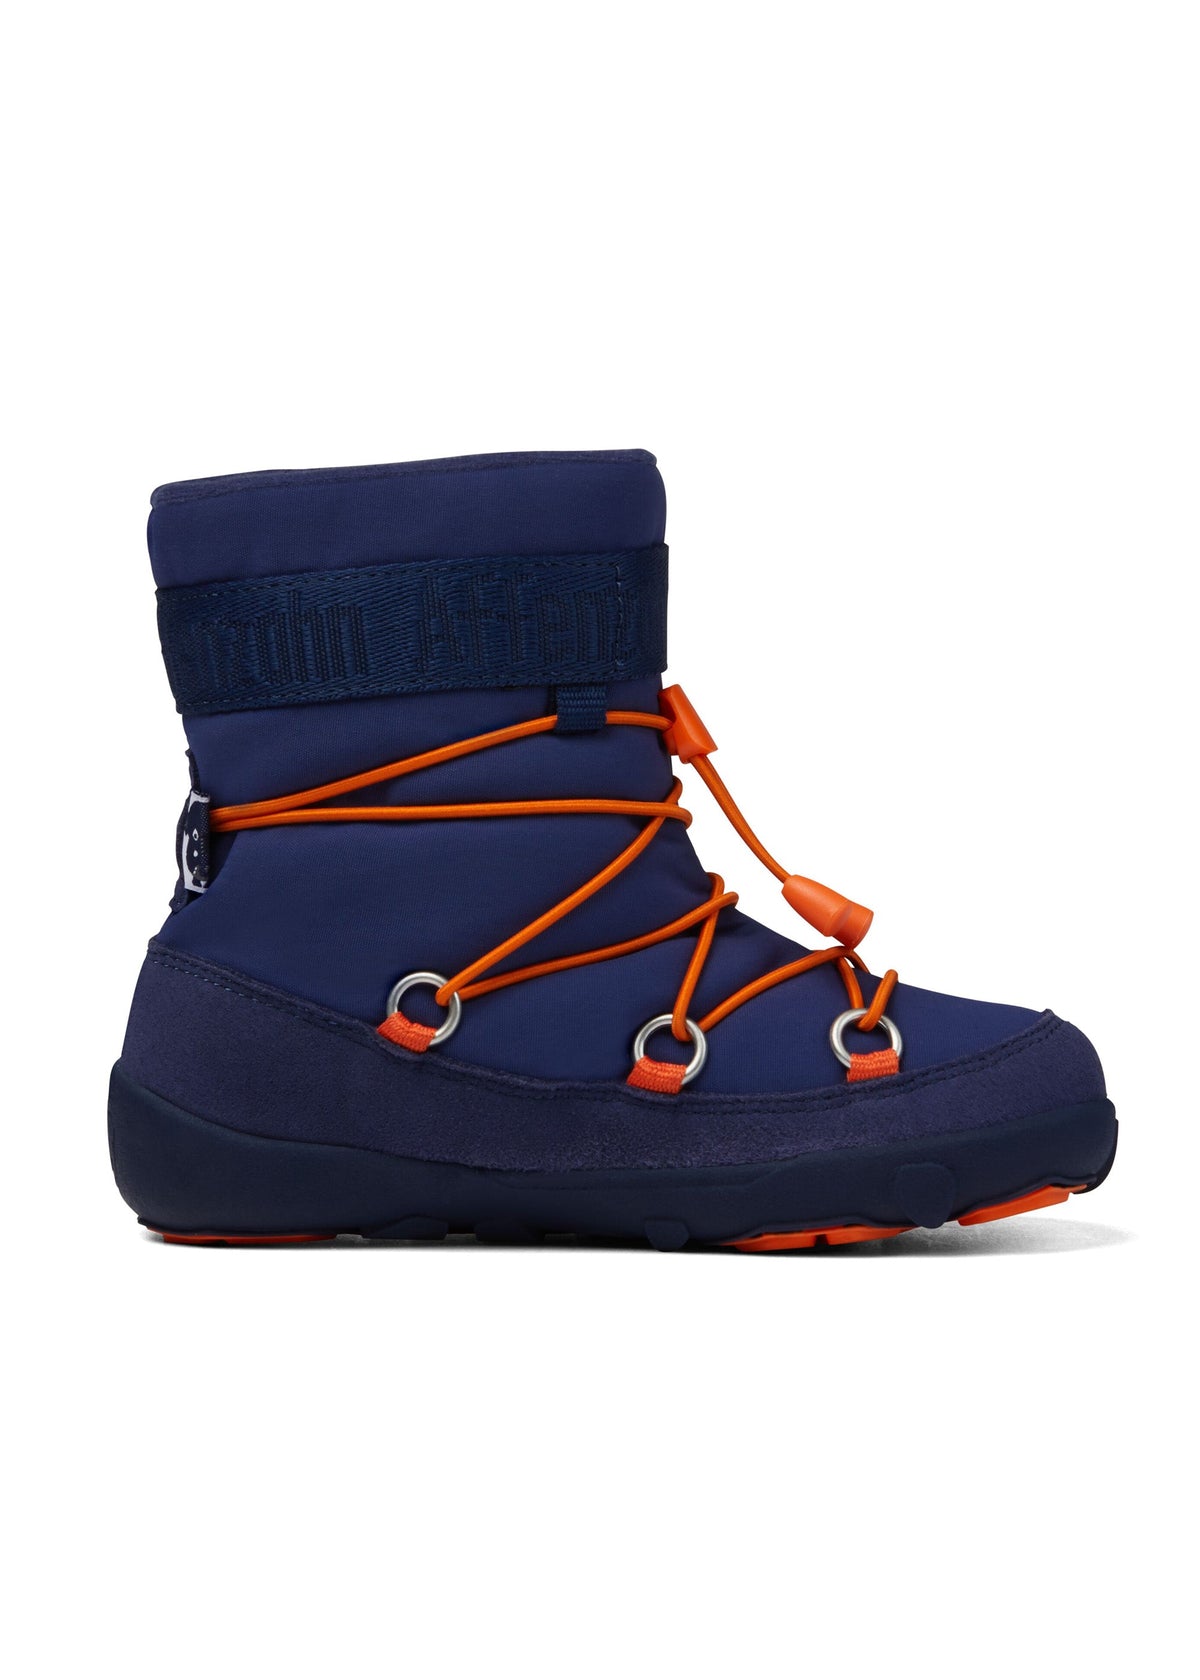 Children's barefoot shoes - Snowboot Elephant, winter shoes with TEX membrane - dark blue, vegan